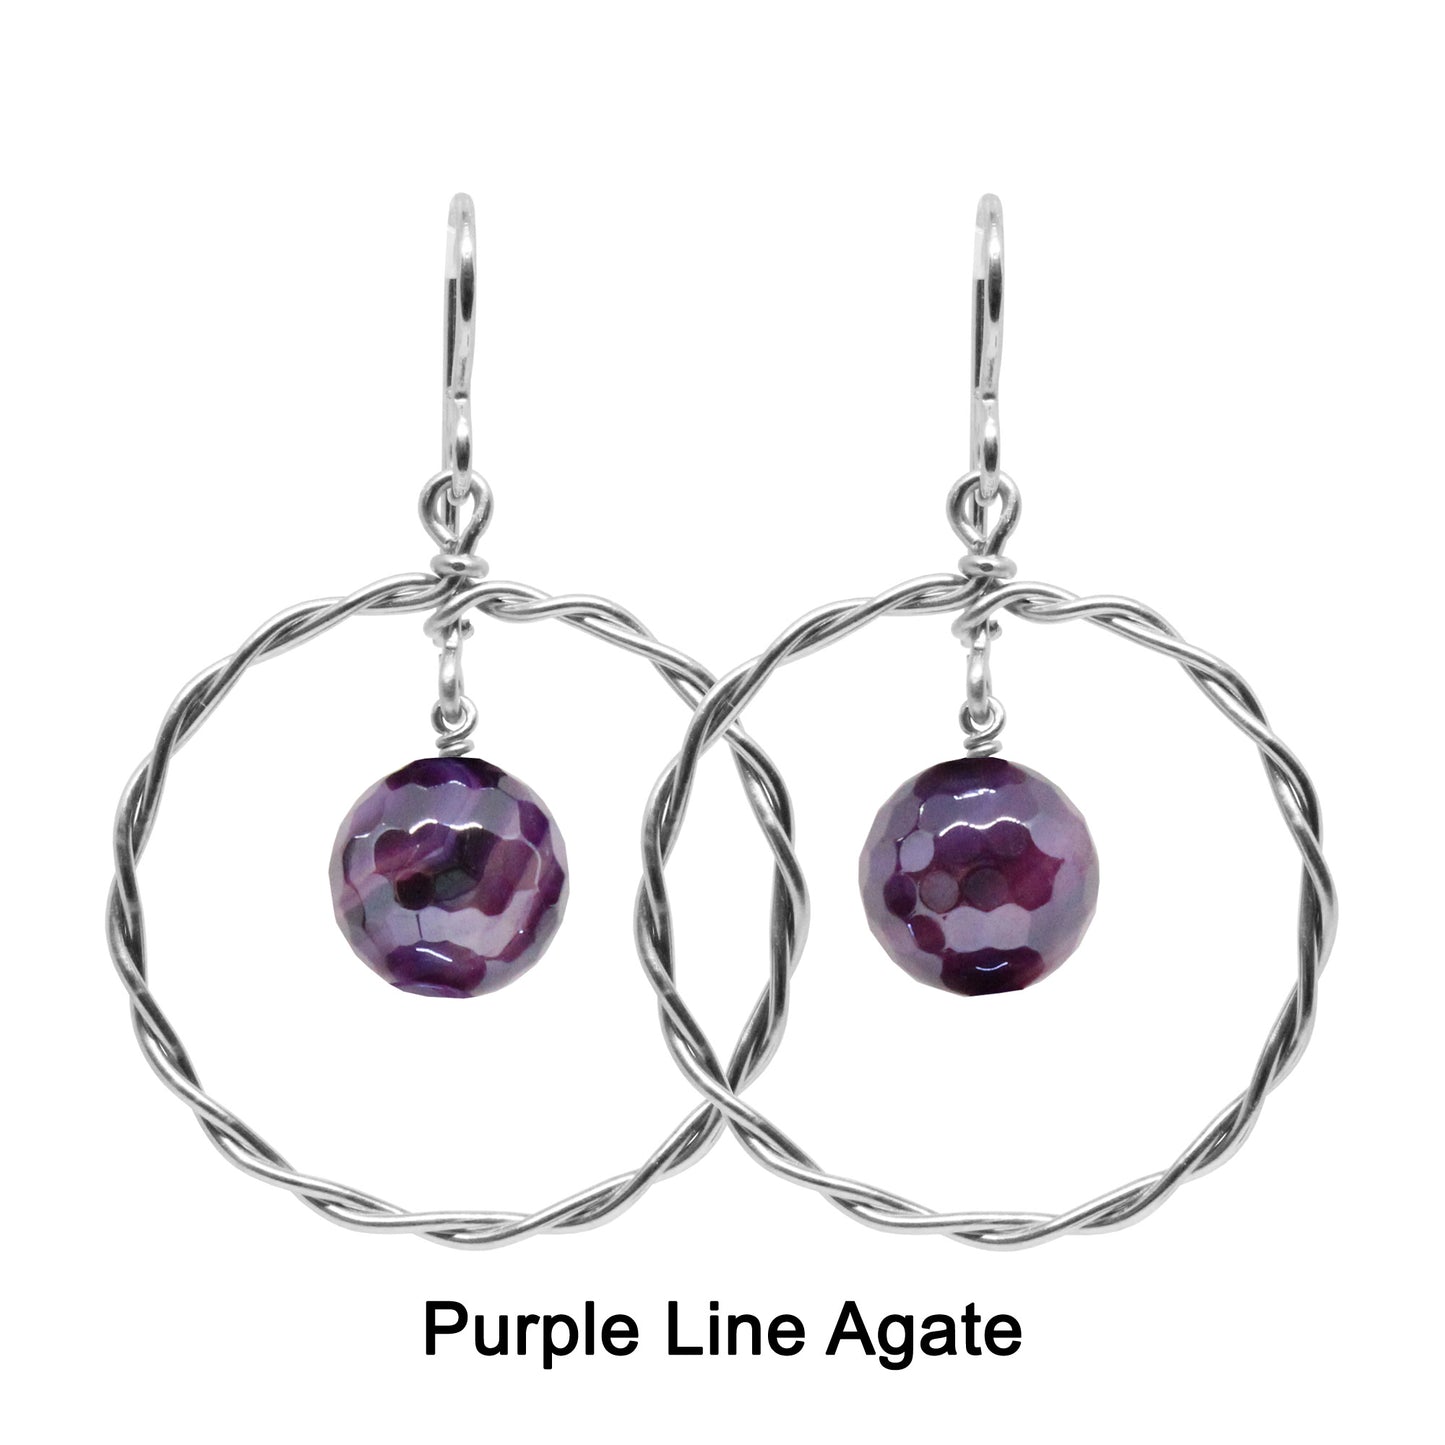 Twisted Wire Hoop Earrings / 45mm length / sterling silver hook hook earwires / faceted agate beads / choose from sea blue, seafoam or purple